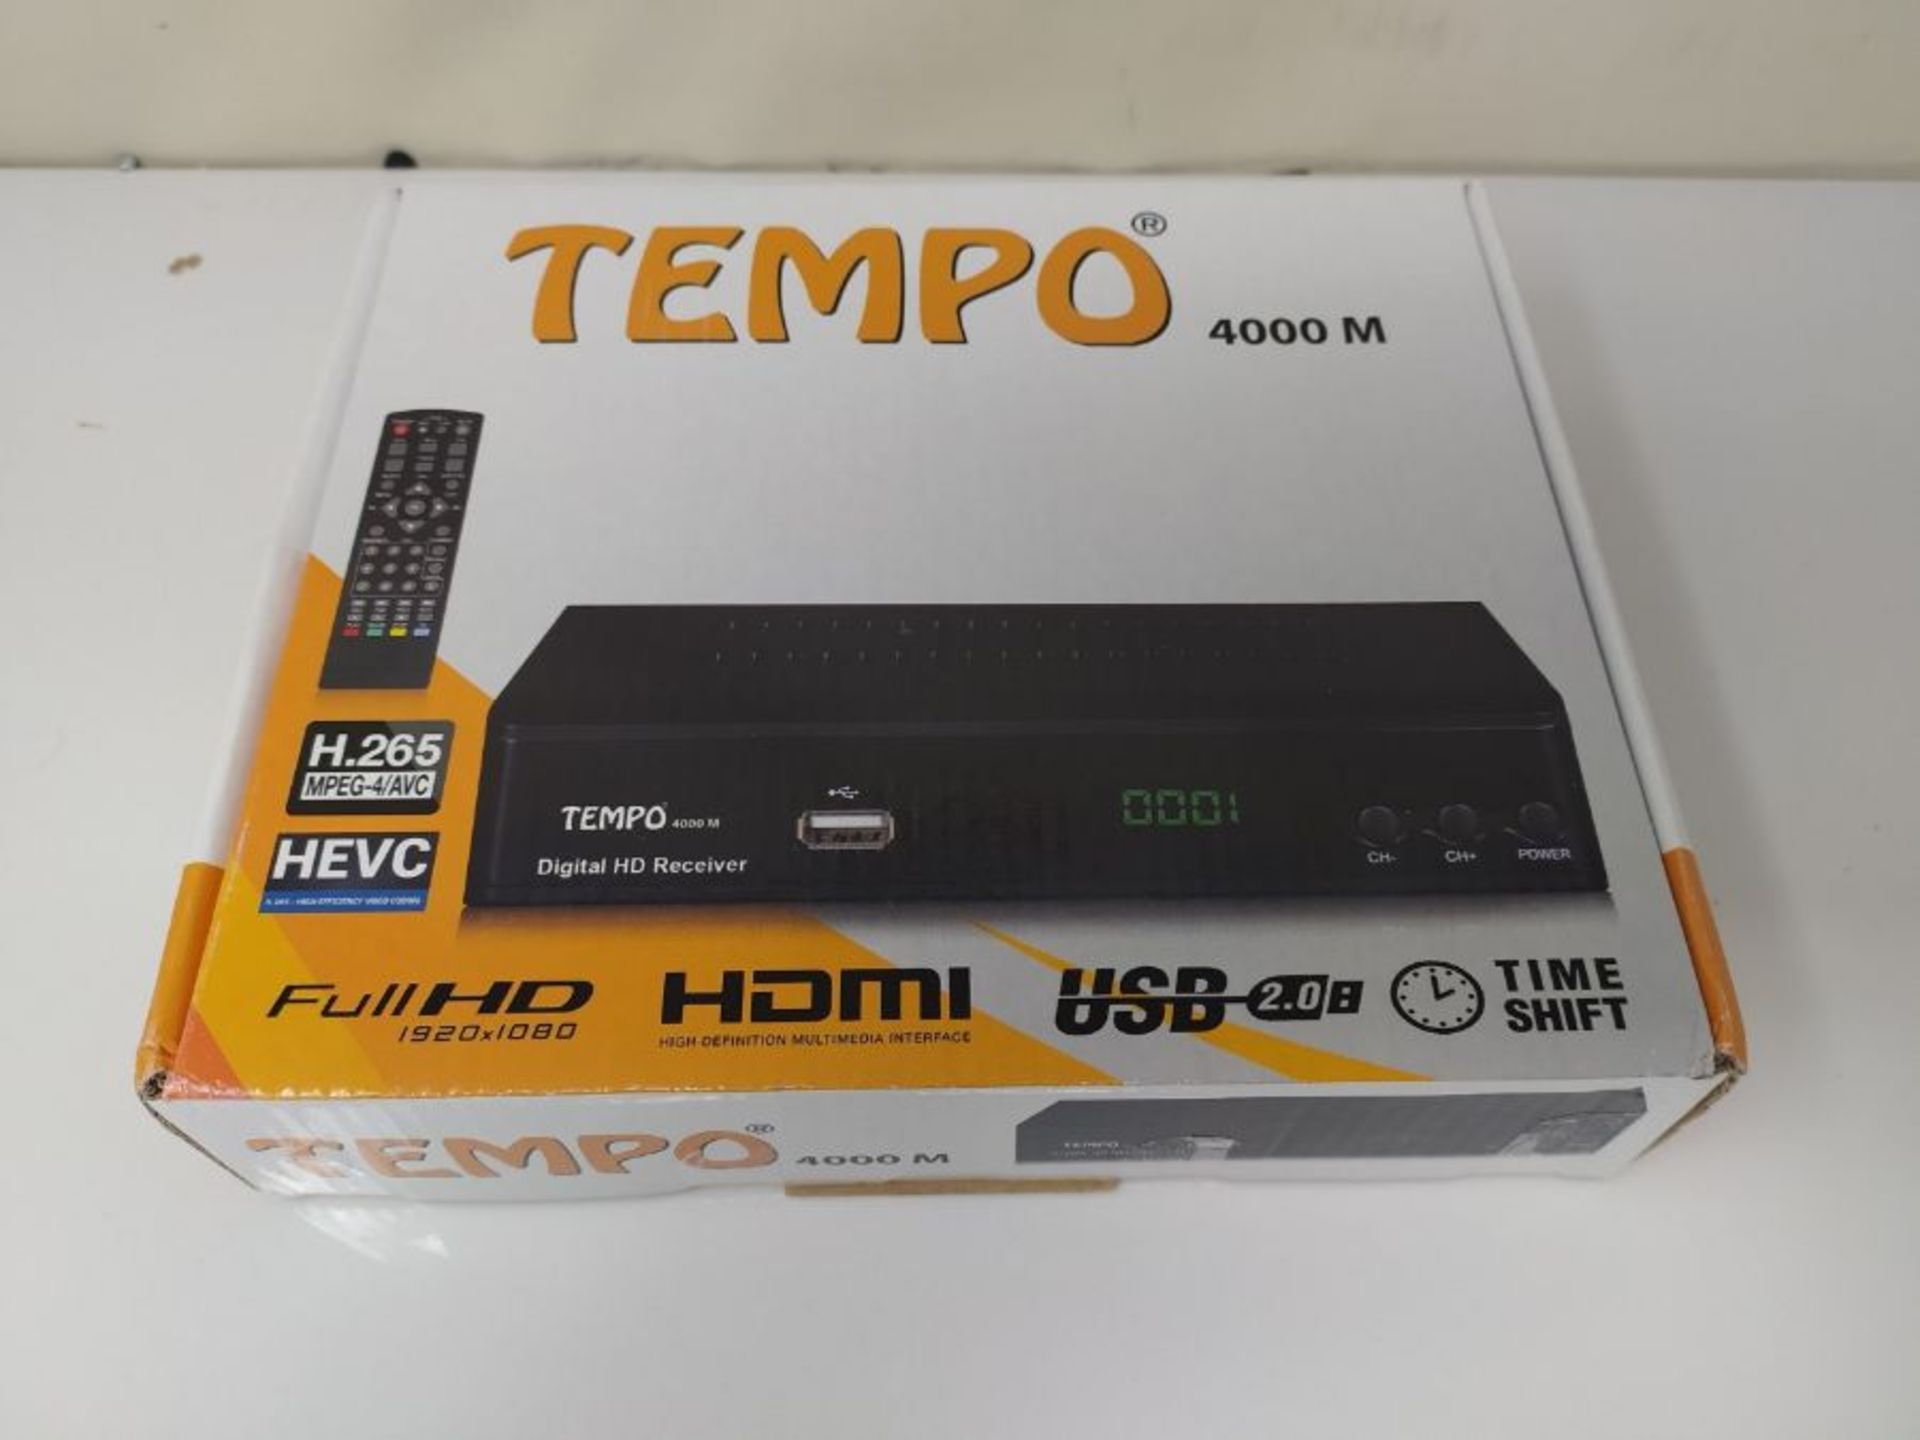 Tempo tmp4000 - Decoder Digitale Terrestre DVB T2 / HD / HDMI / Ricevitore TV / PVR / - Image 2 of 6